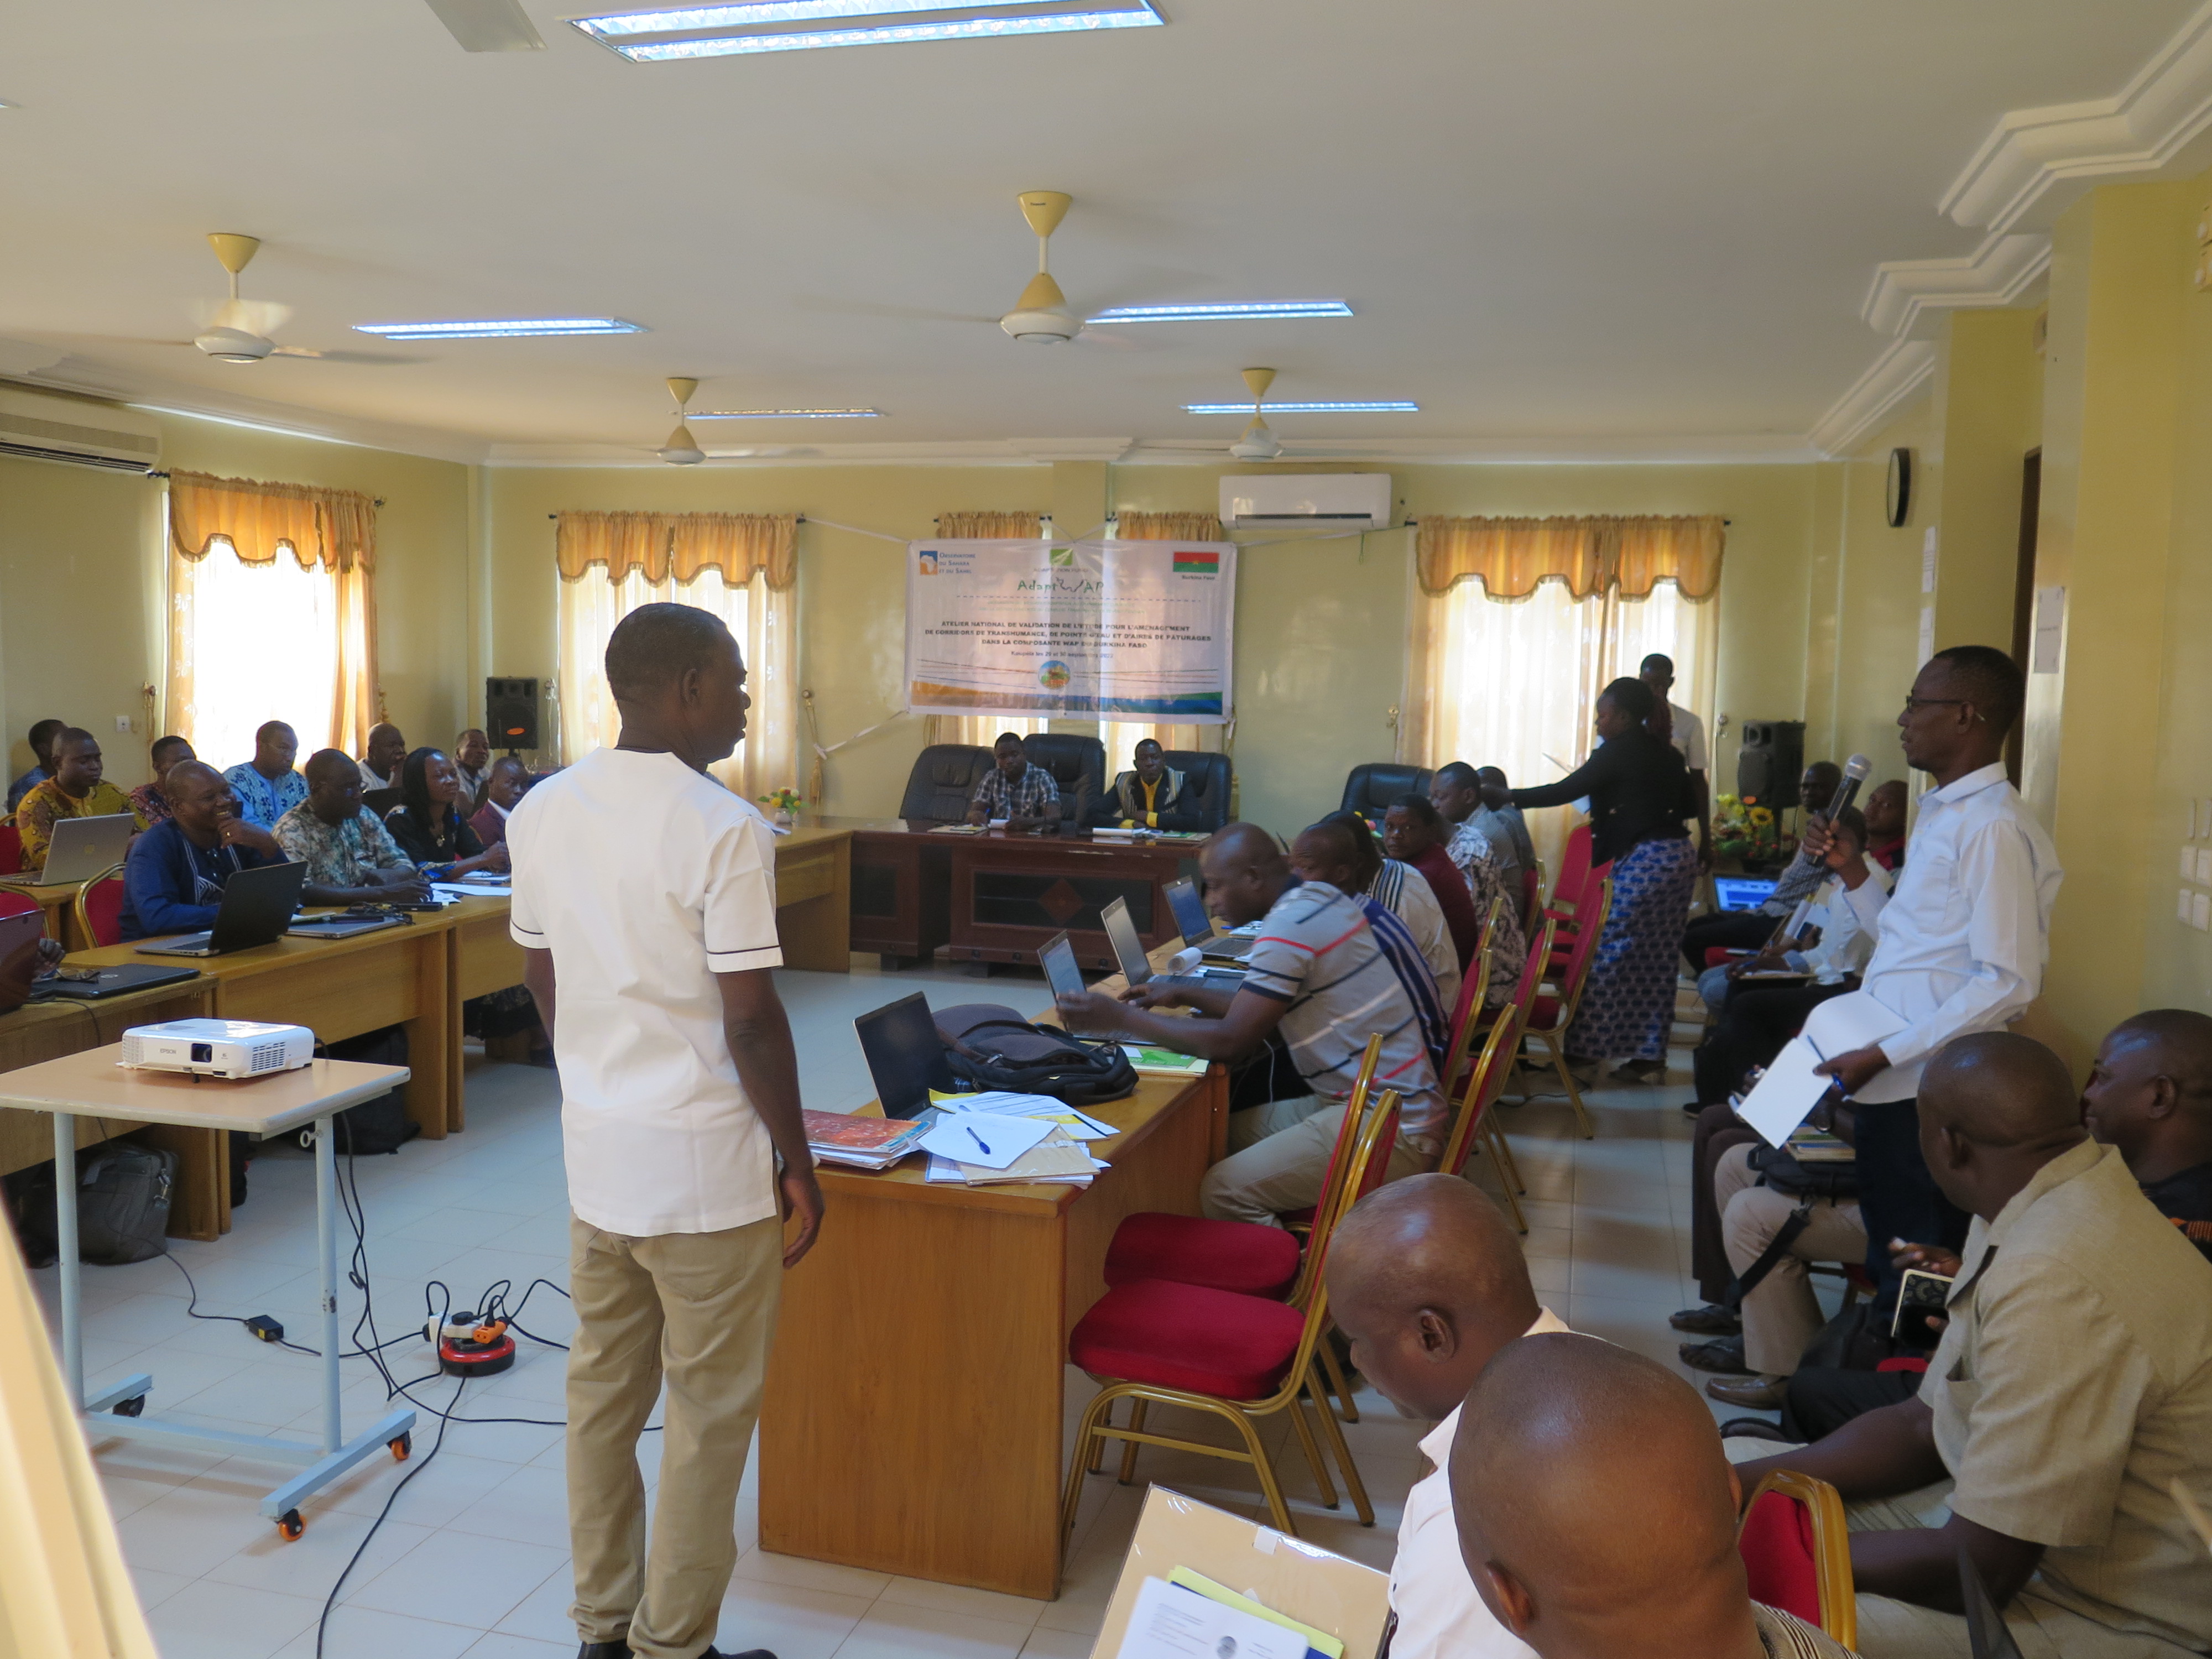 AdaptWAP: Validation workshop Burkina Faso 